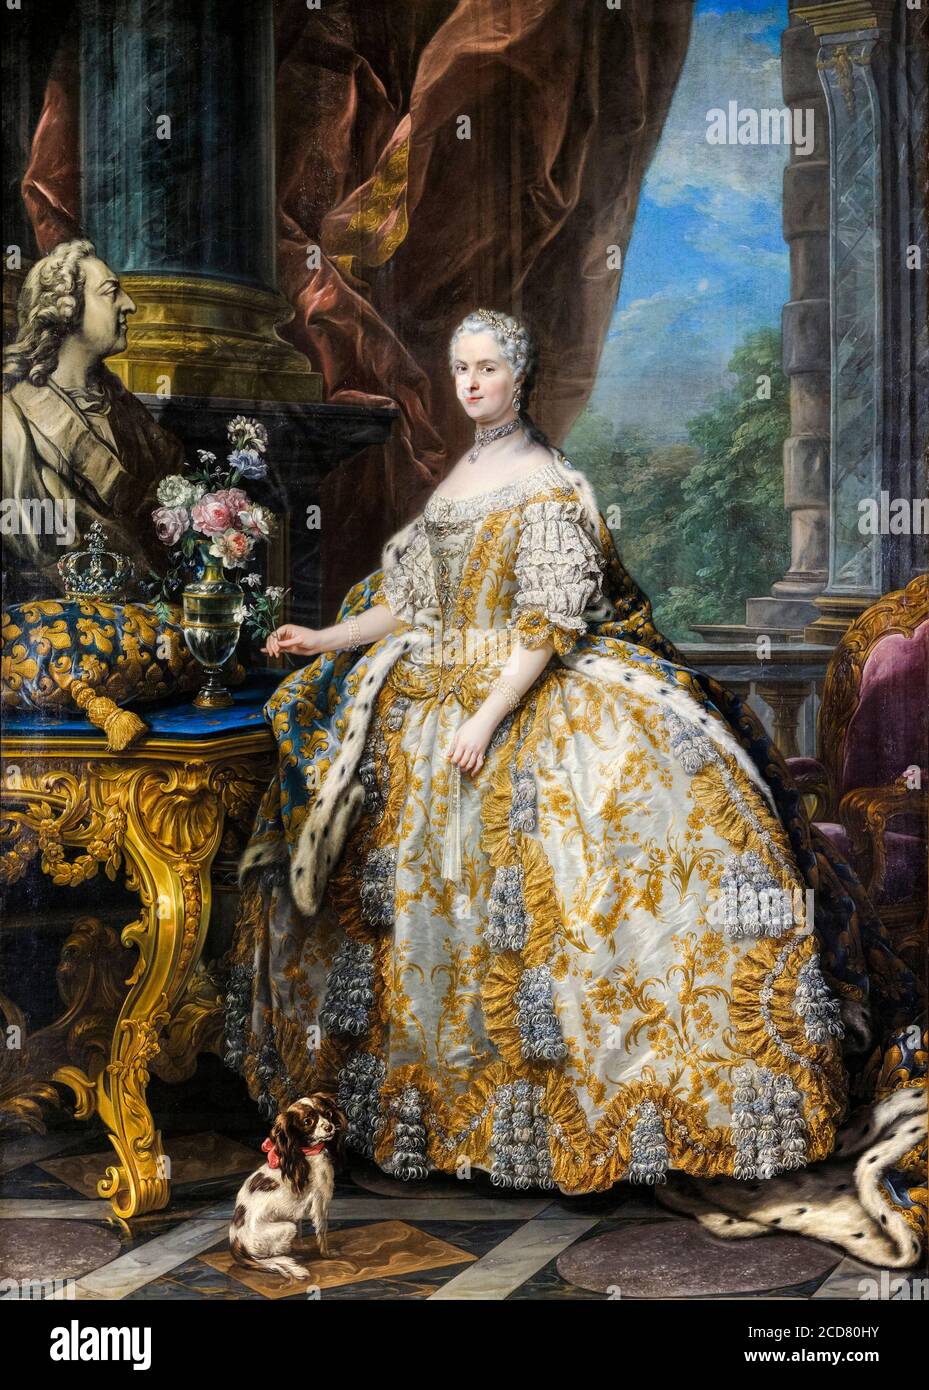 Marie Leszczinska (1703-1768), Queen of France, portrait painting by Carle van Loo, 1747 Stock Photo